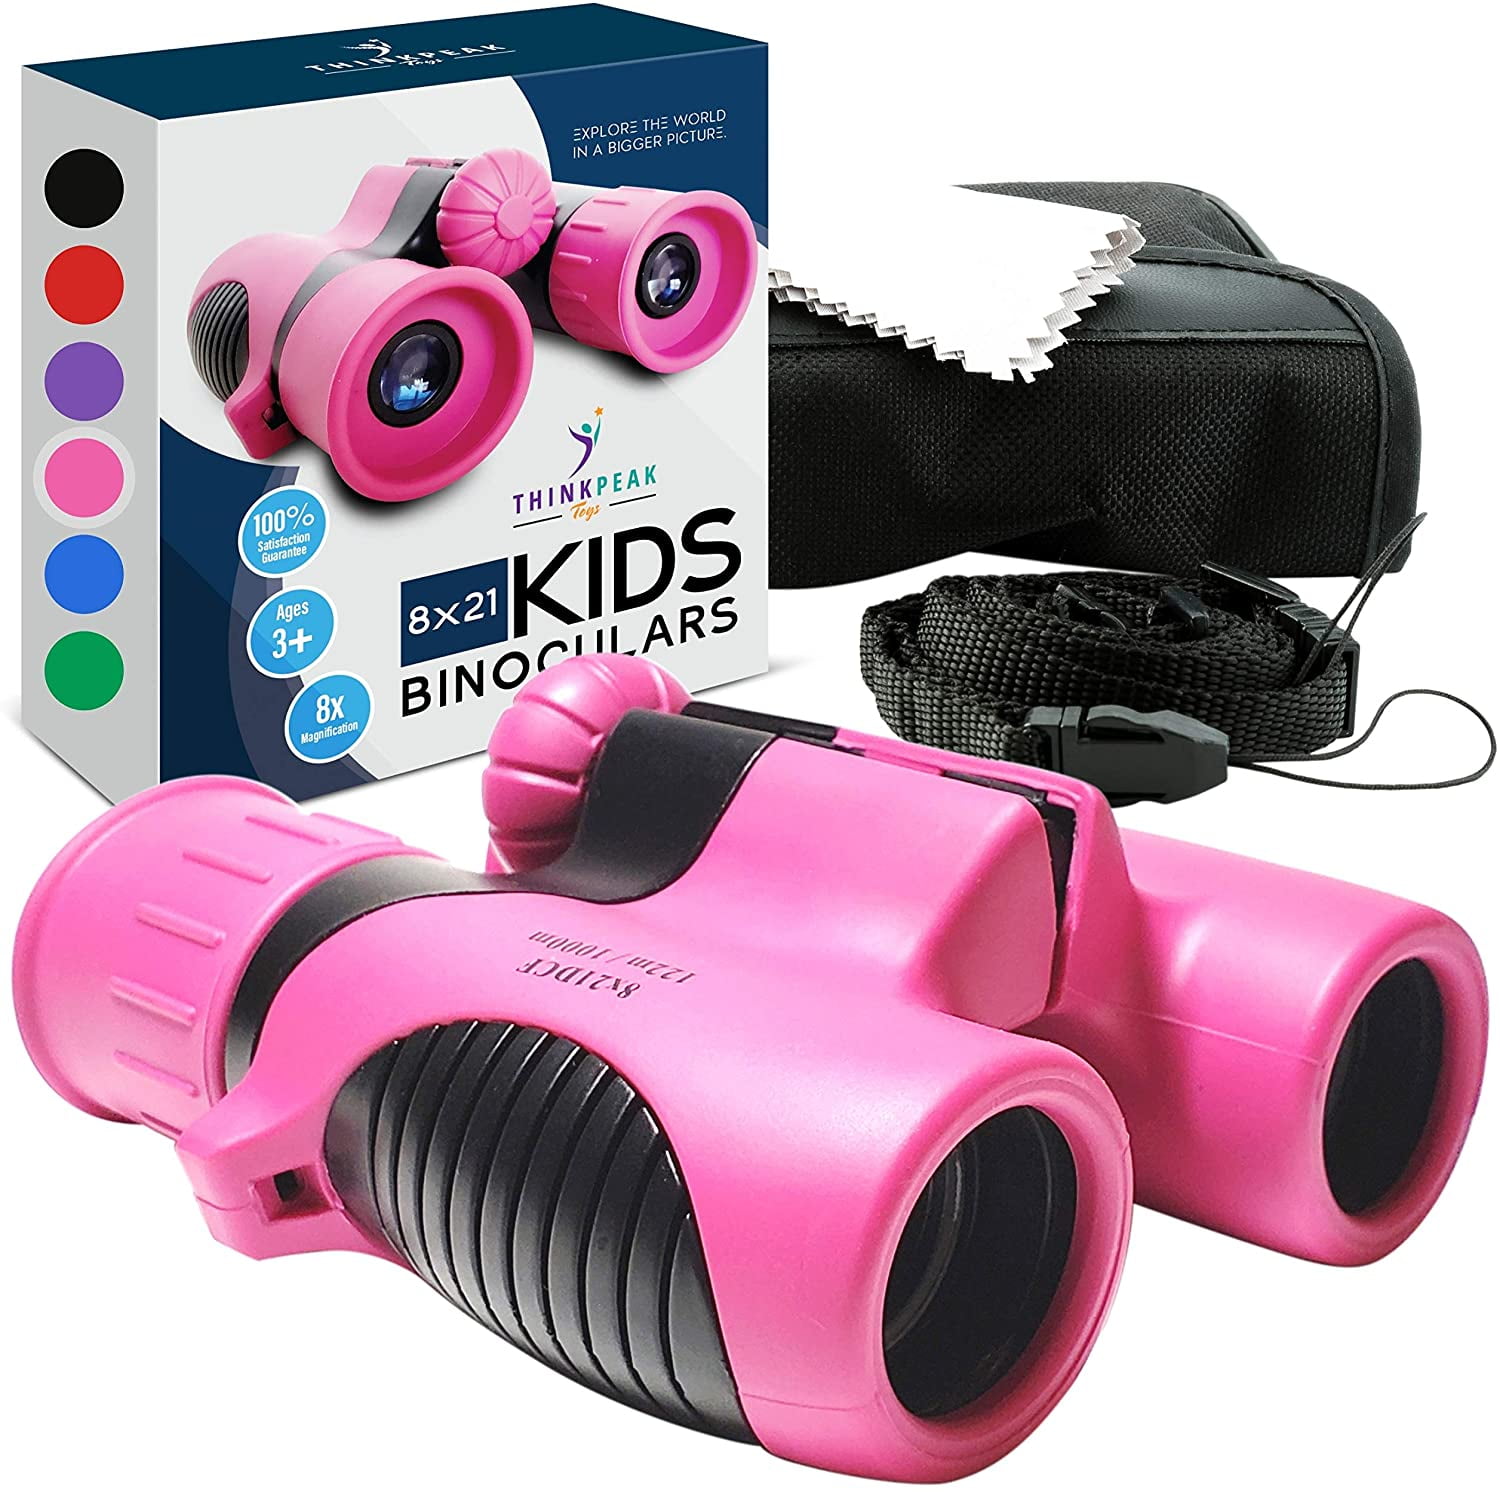 Kids Binoculars Green or Pink Vibrant Color Options Boys Girls 